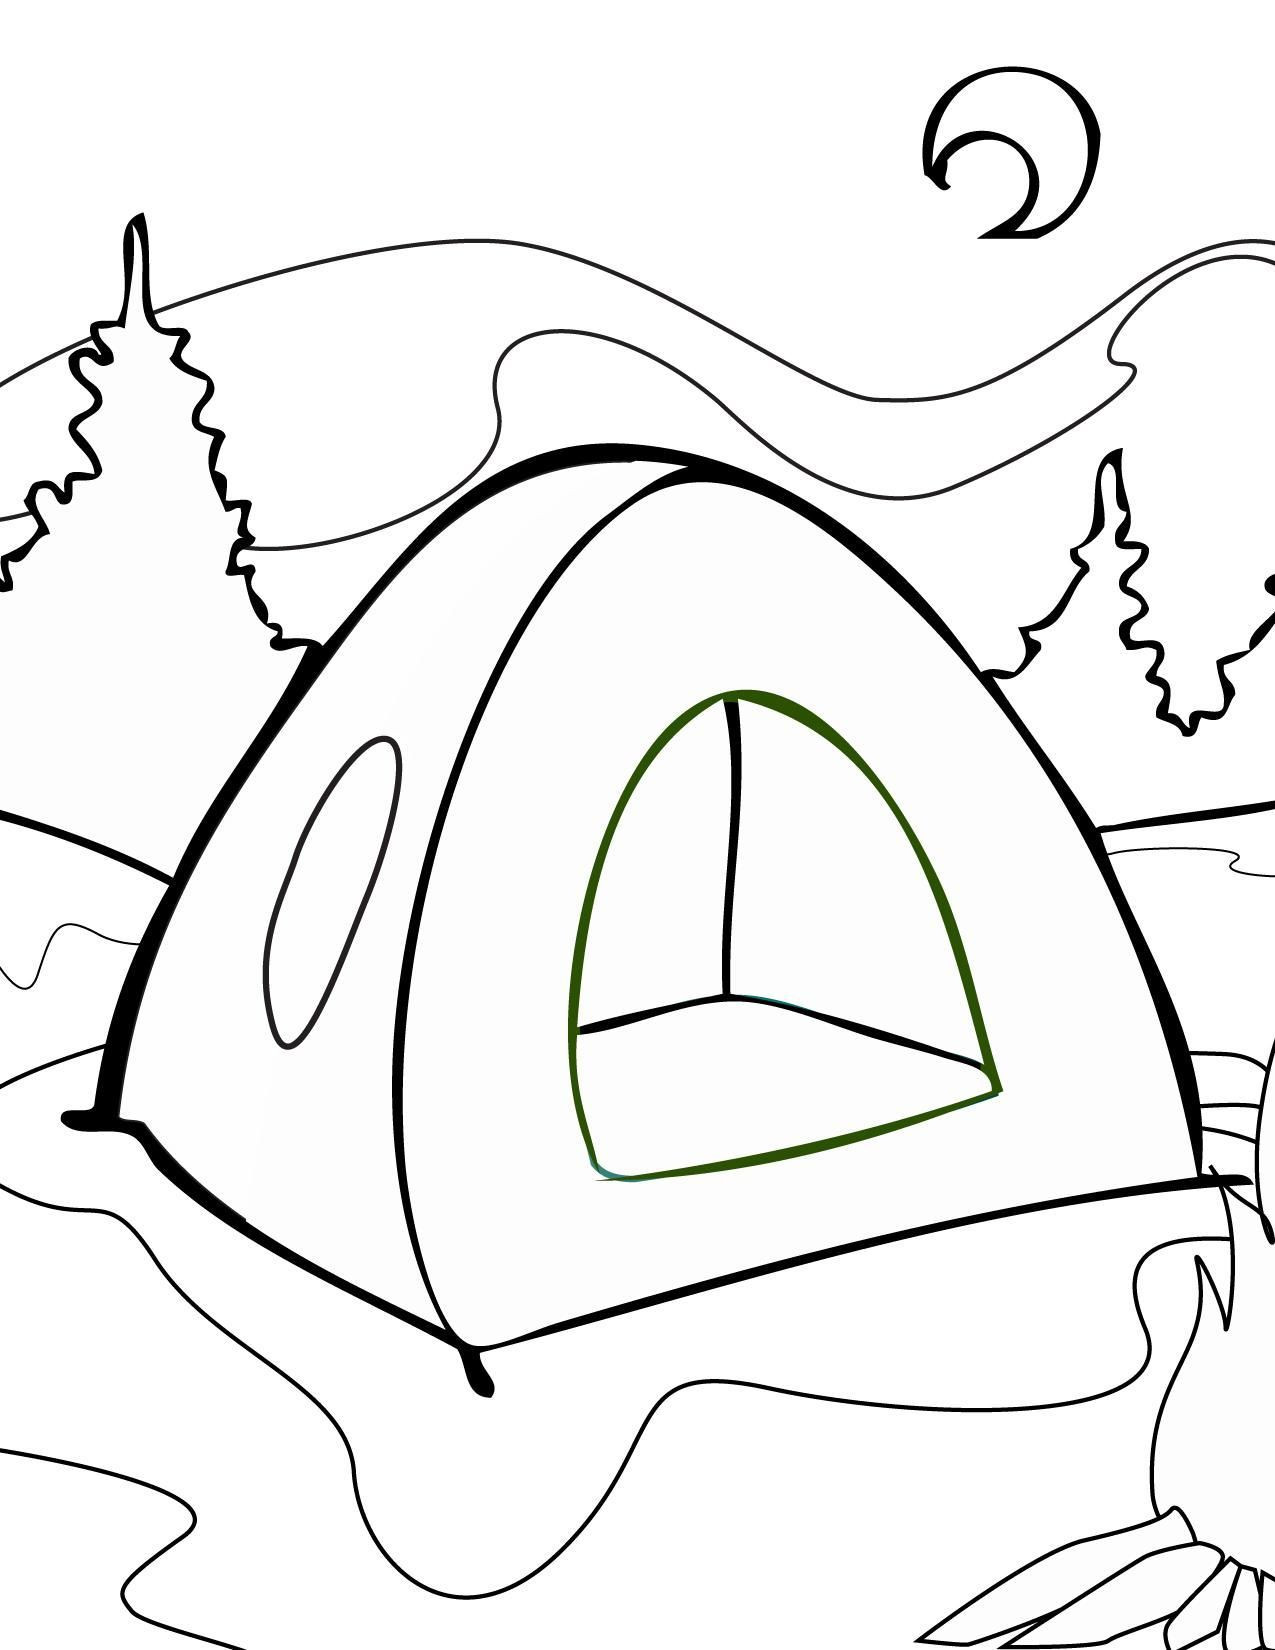 Free Printable Camping Coloring Pages
 Camping Tent Drawing at GetDrawings